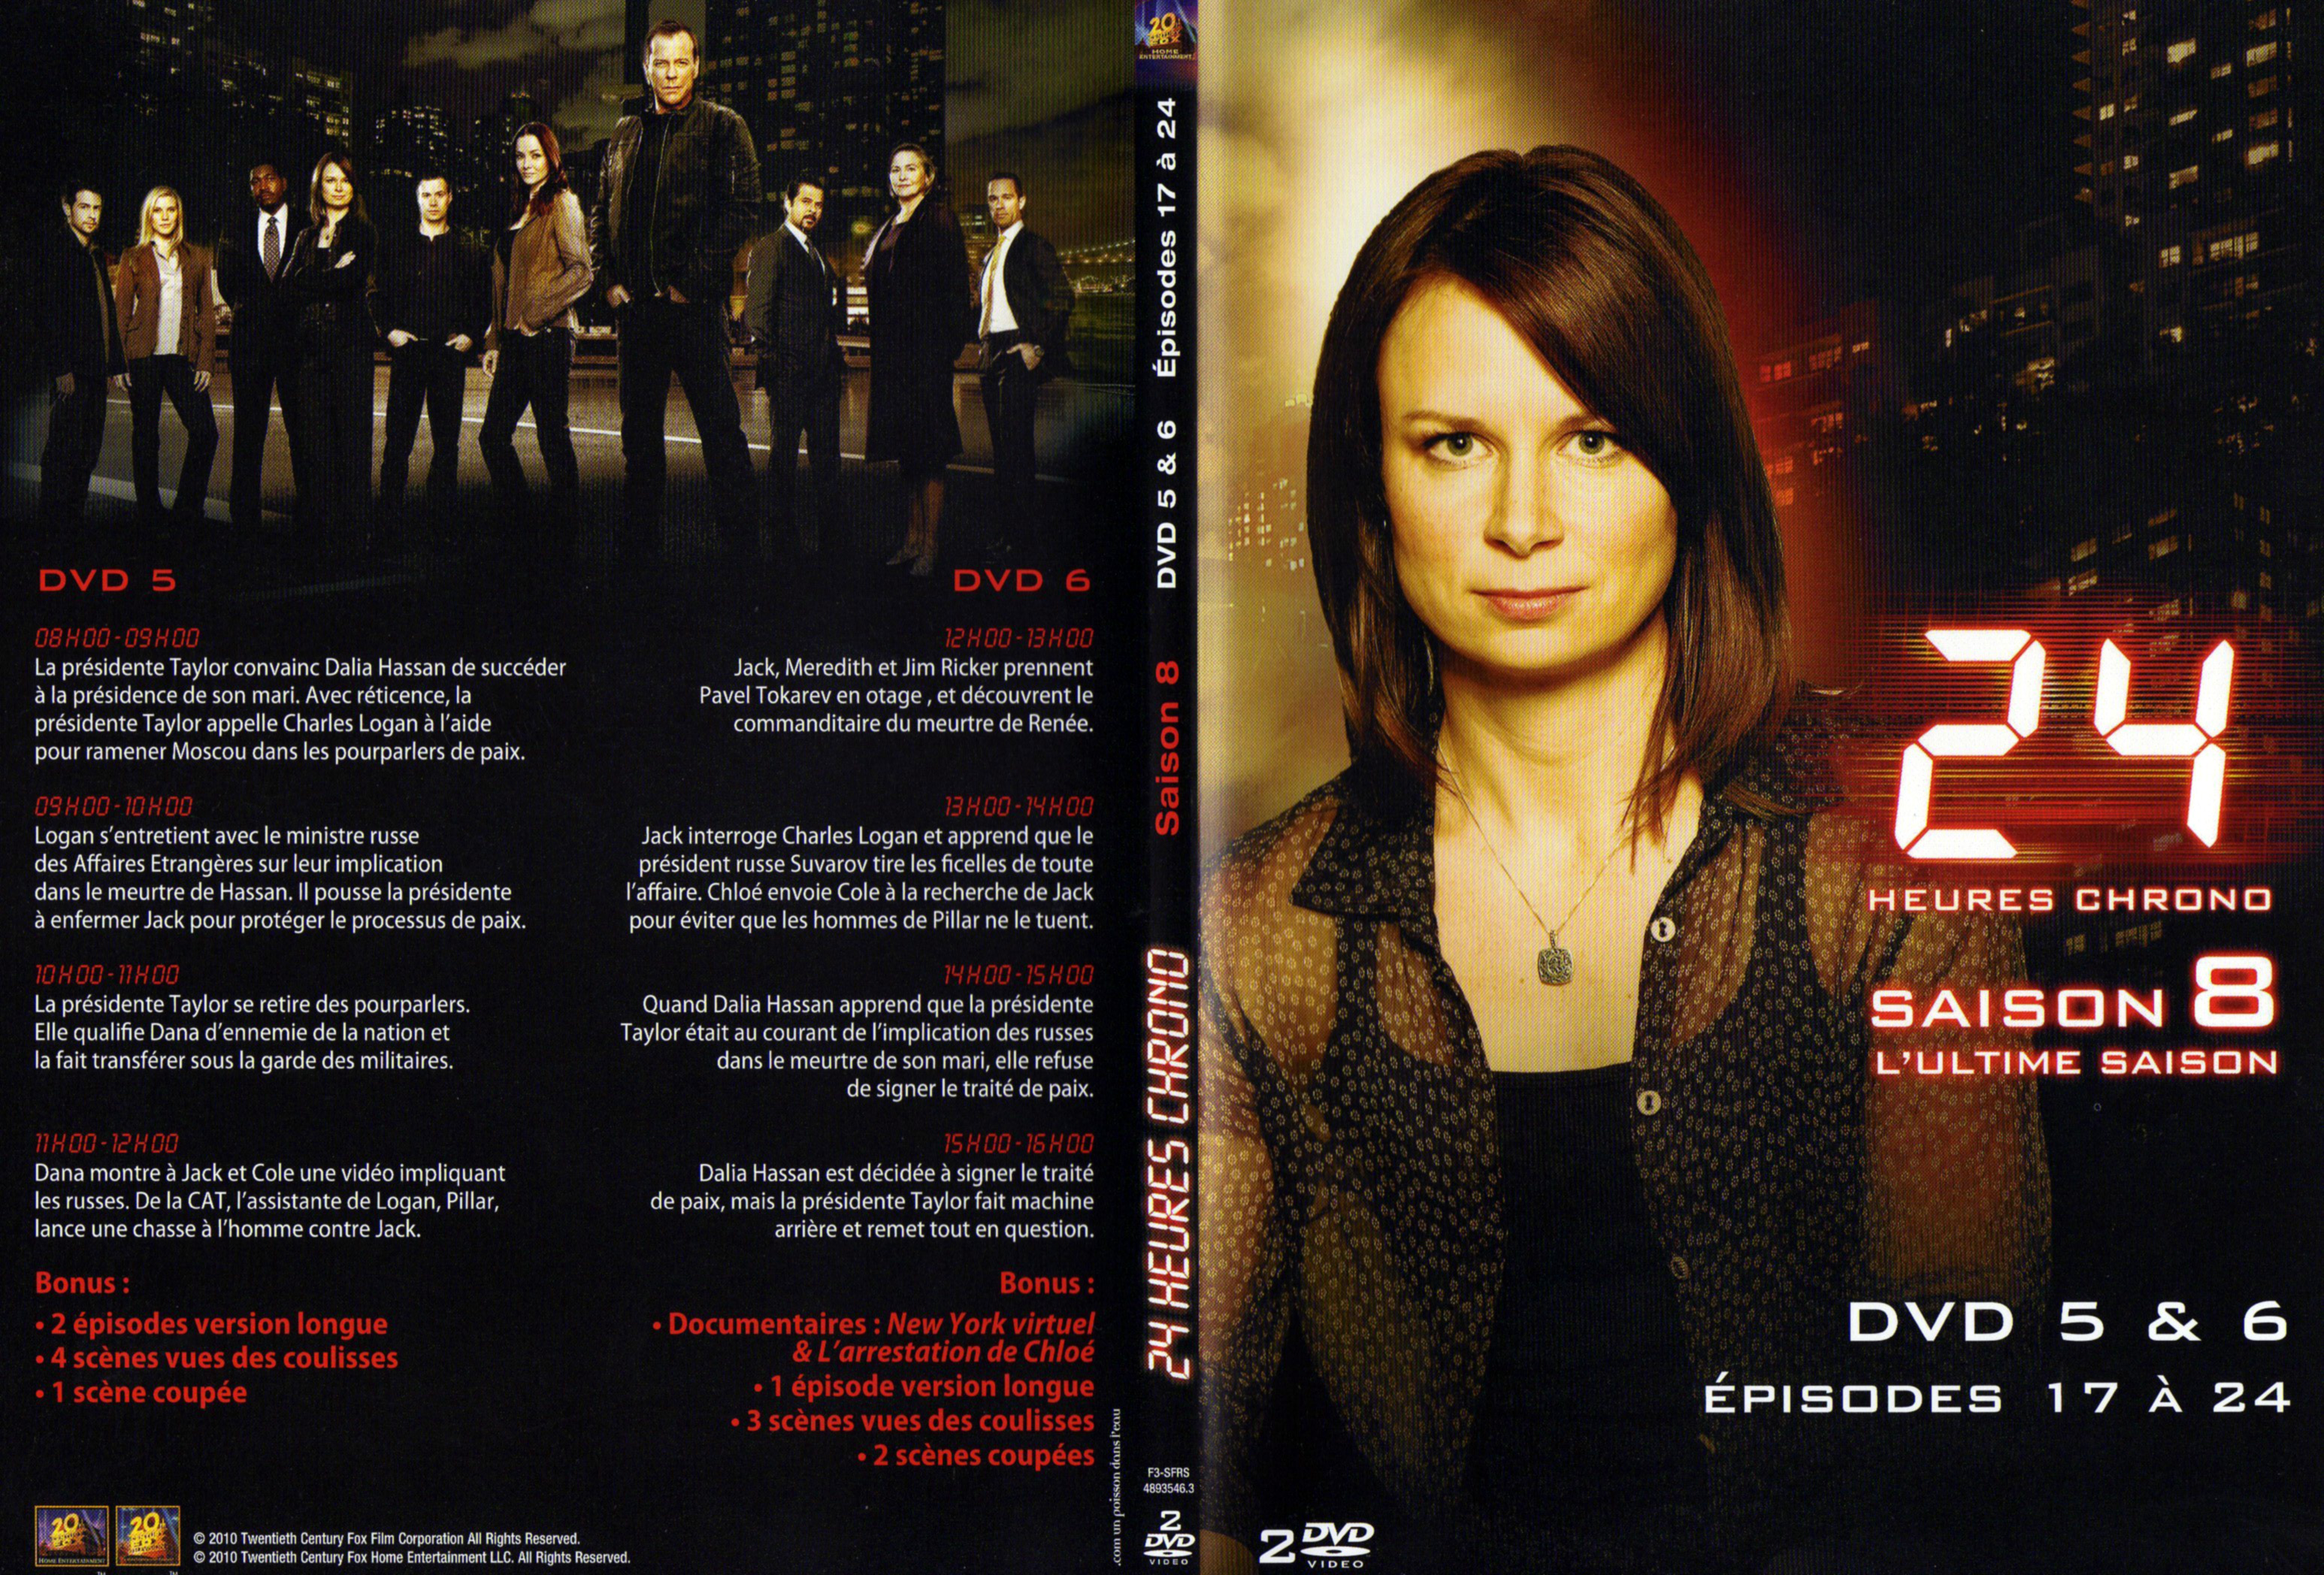 Jaquette DVD 24 heures chrono Saison 8 DVD 3